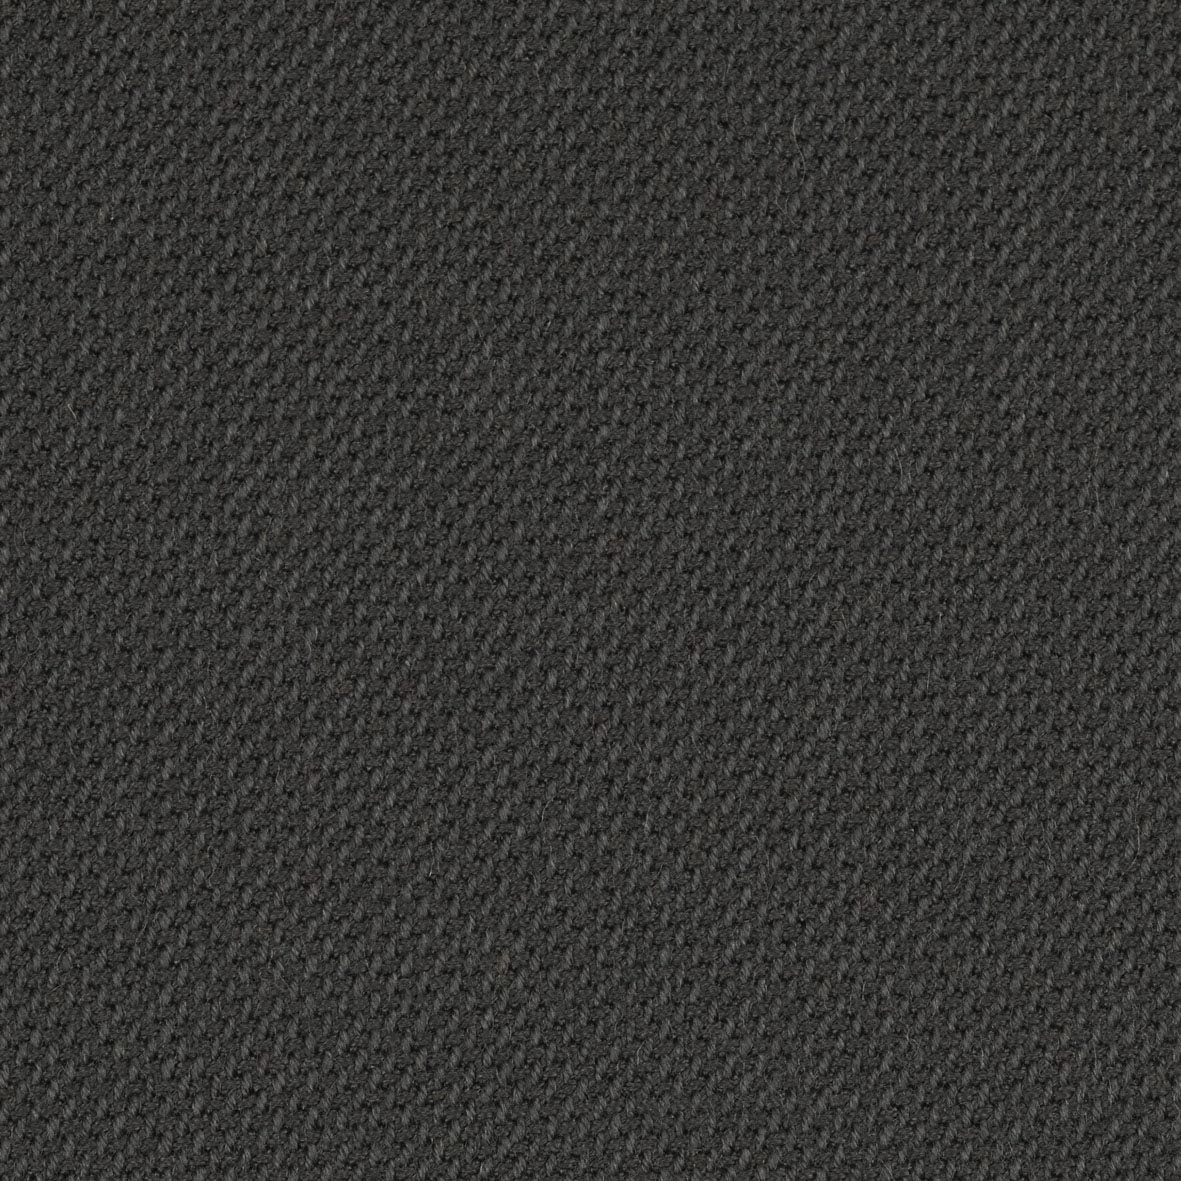 Office chair RH Mereo 200, dark gray fabric upholstery, black